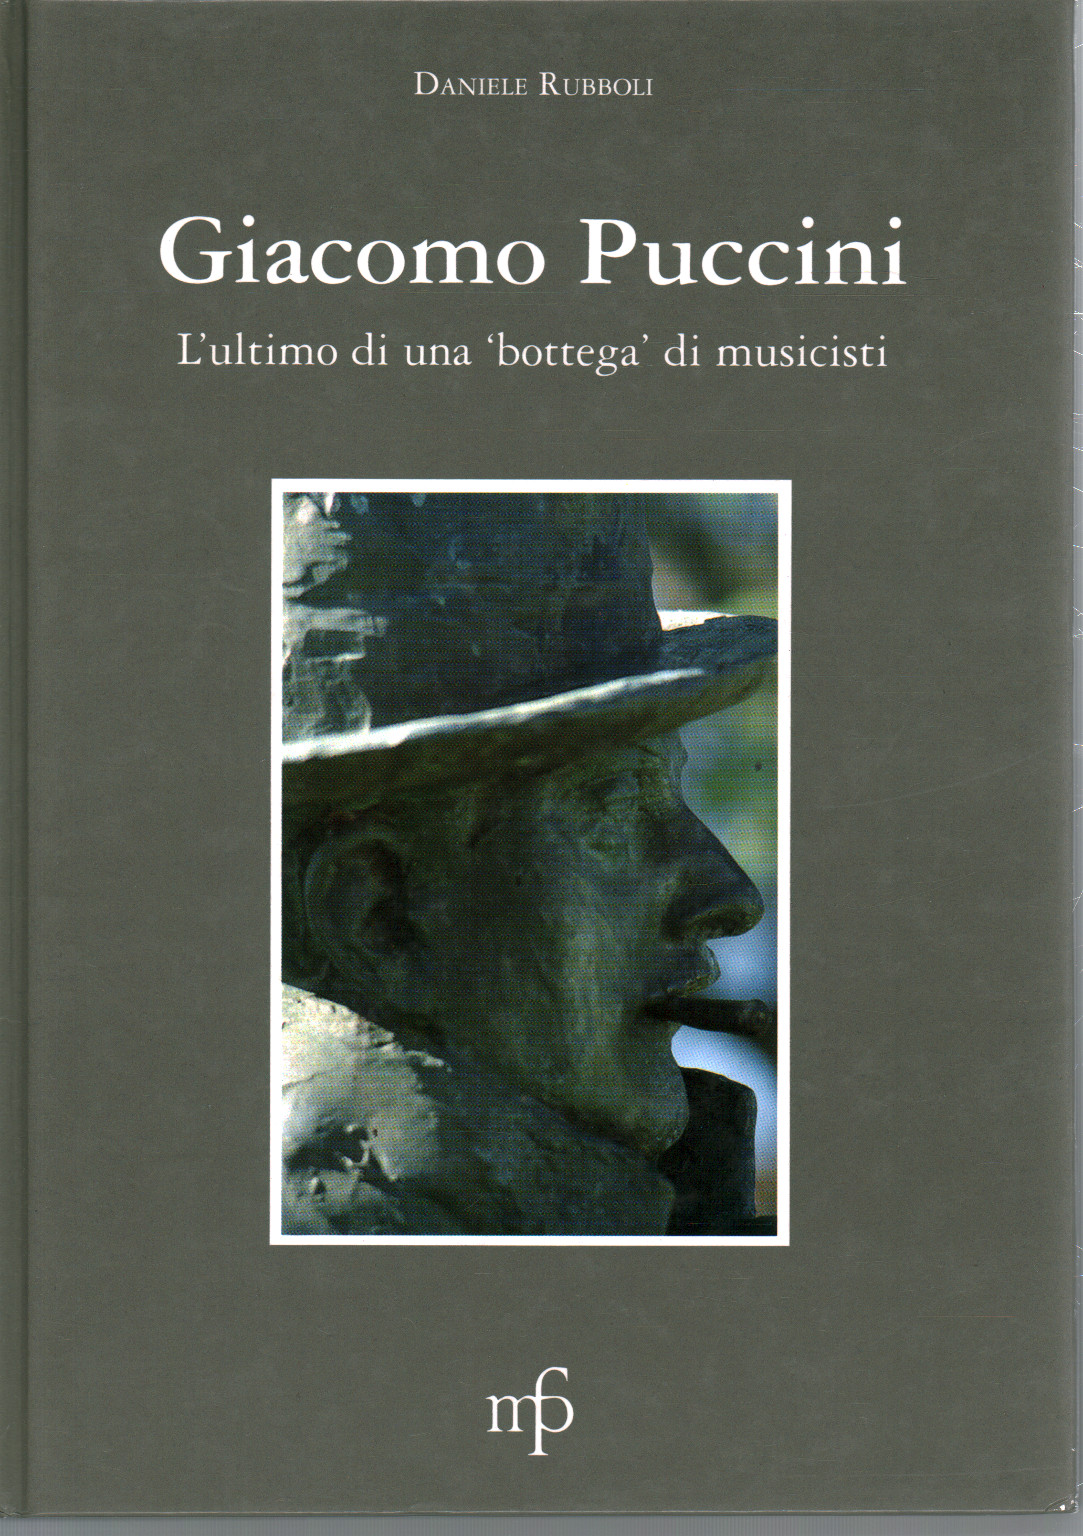 Giacomo Puccini, ' s ist.zu.